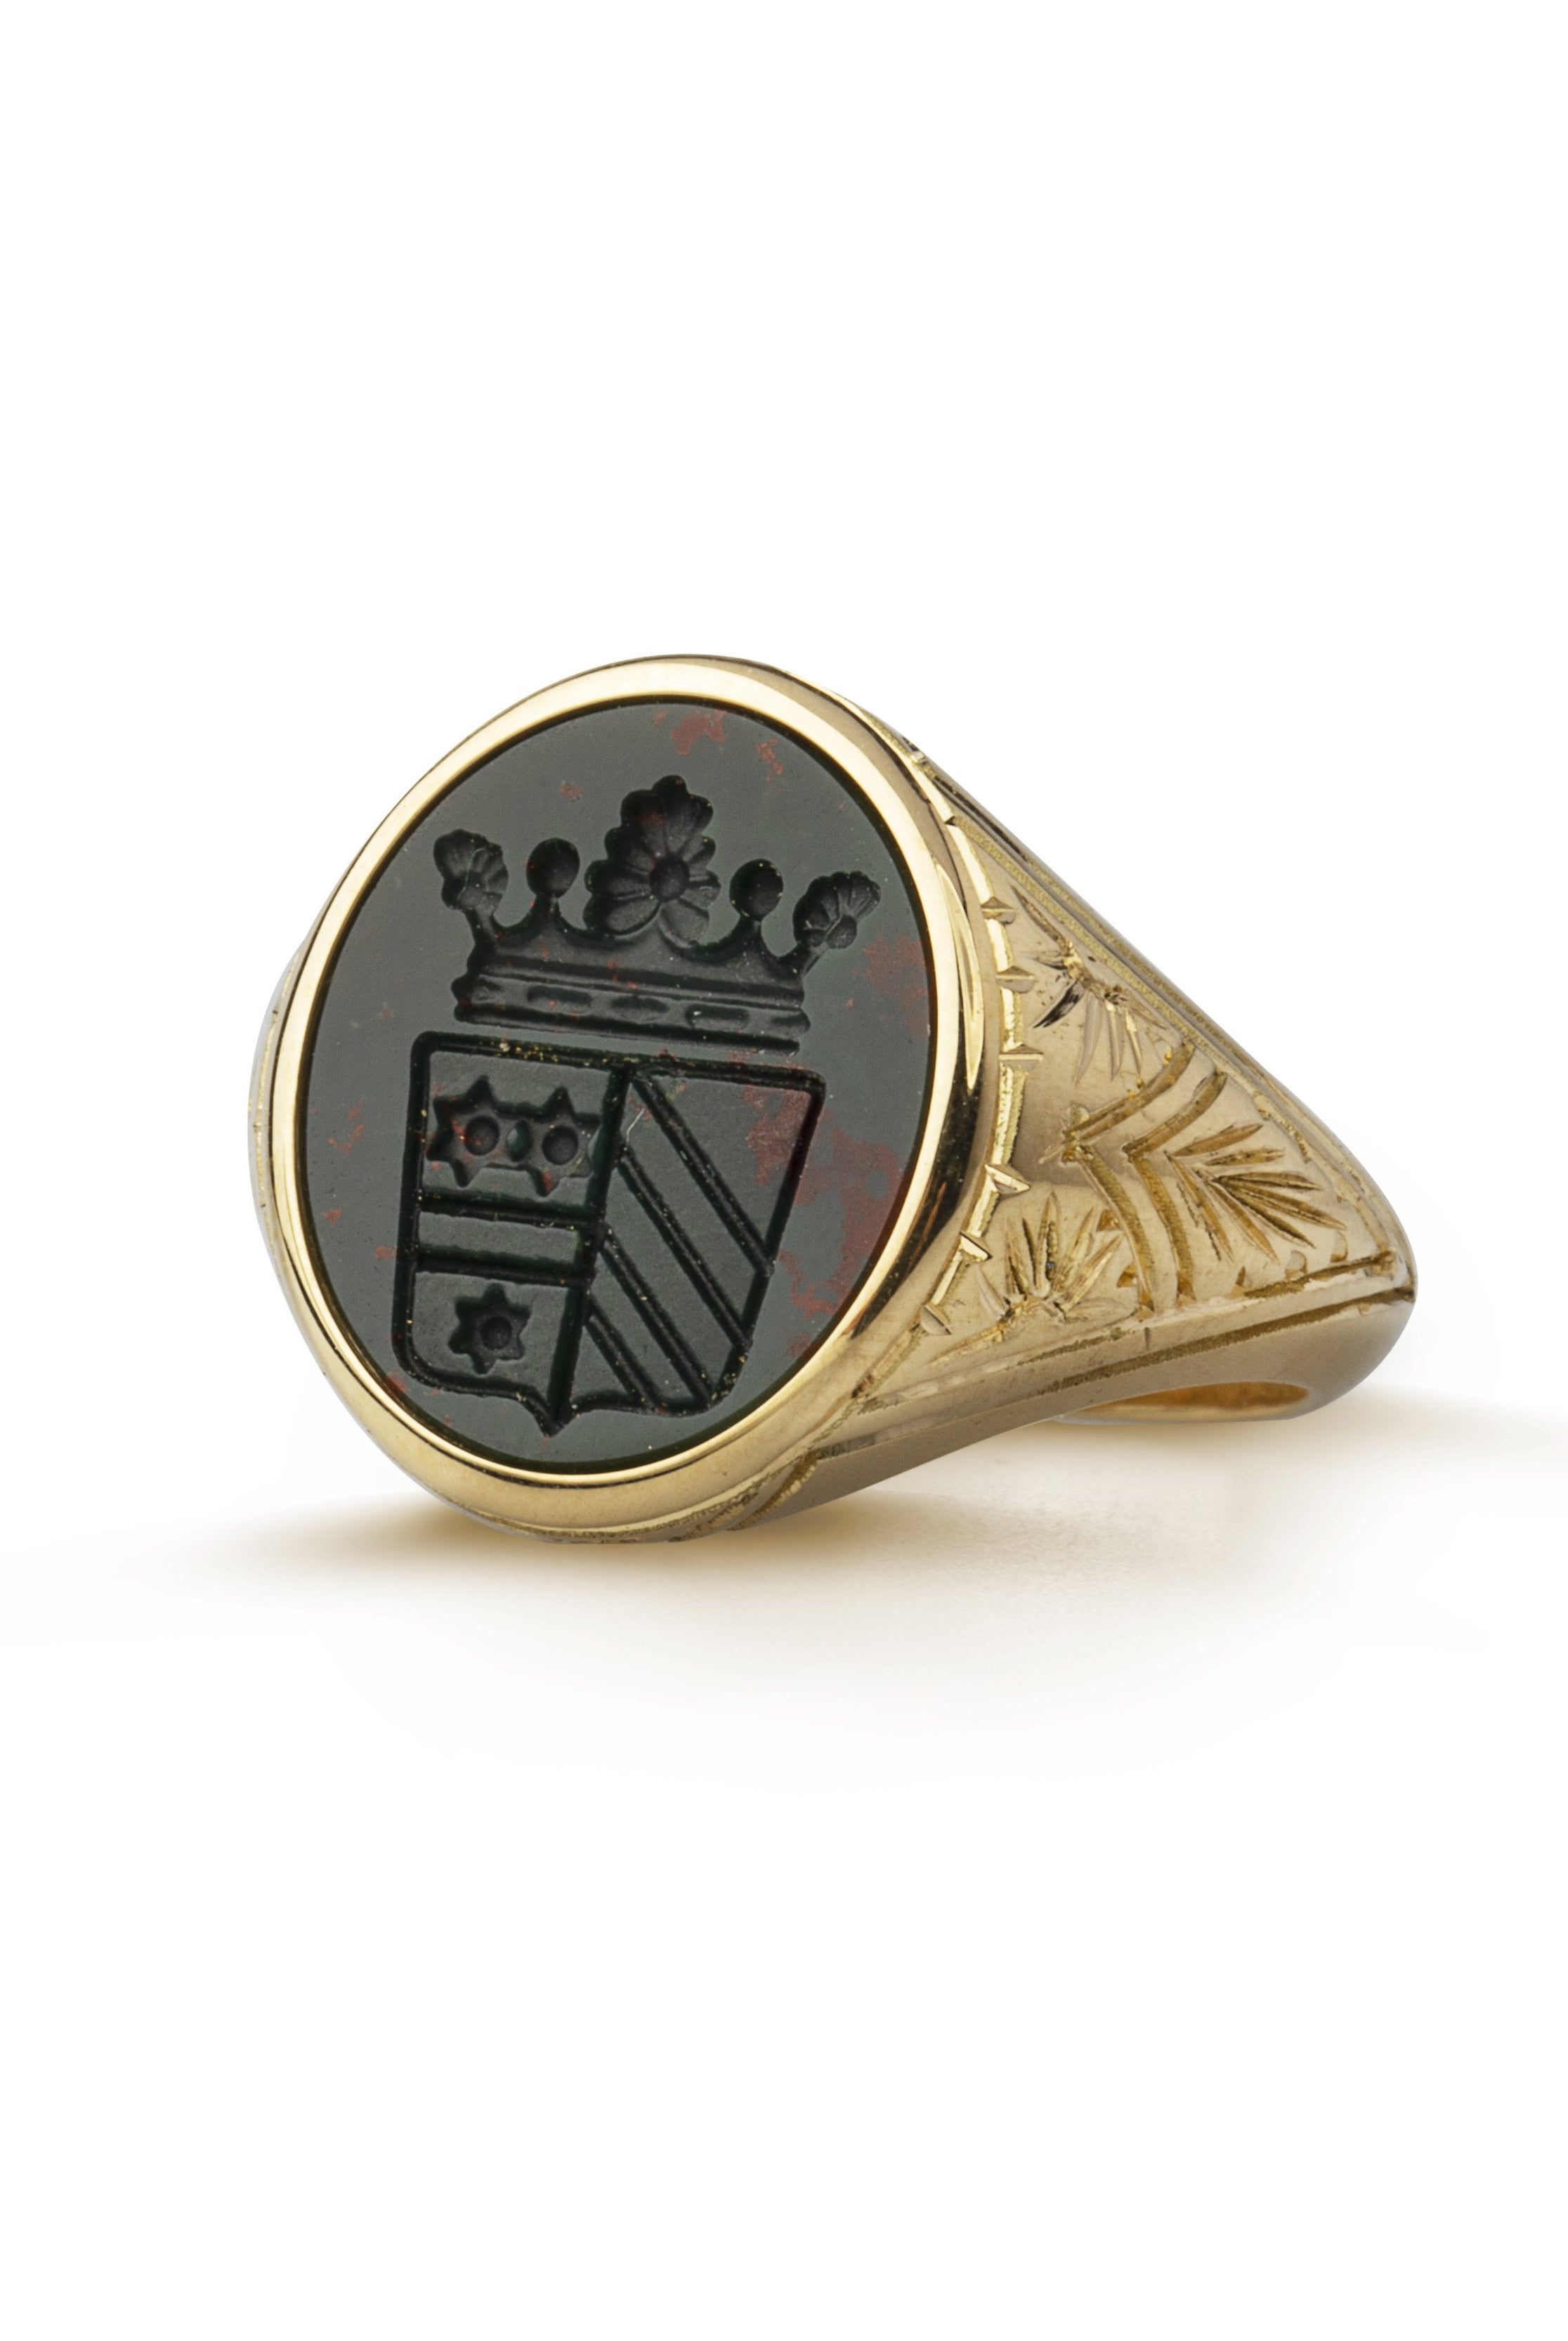 bloodstone family crest signet ring by Danelian Jewelry